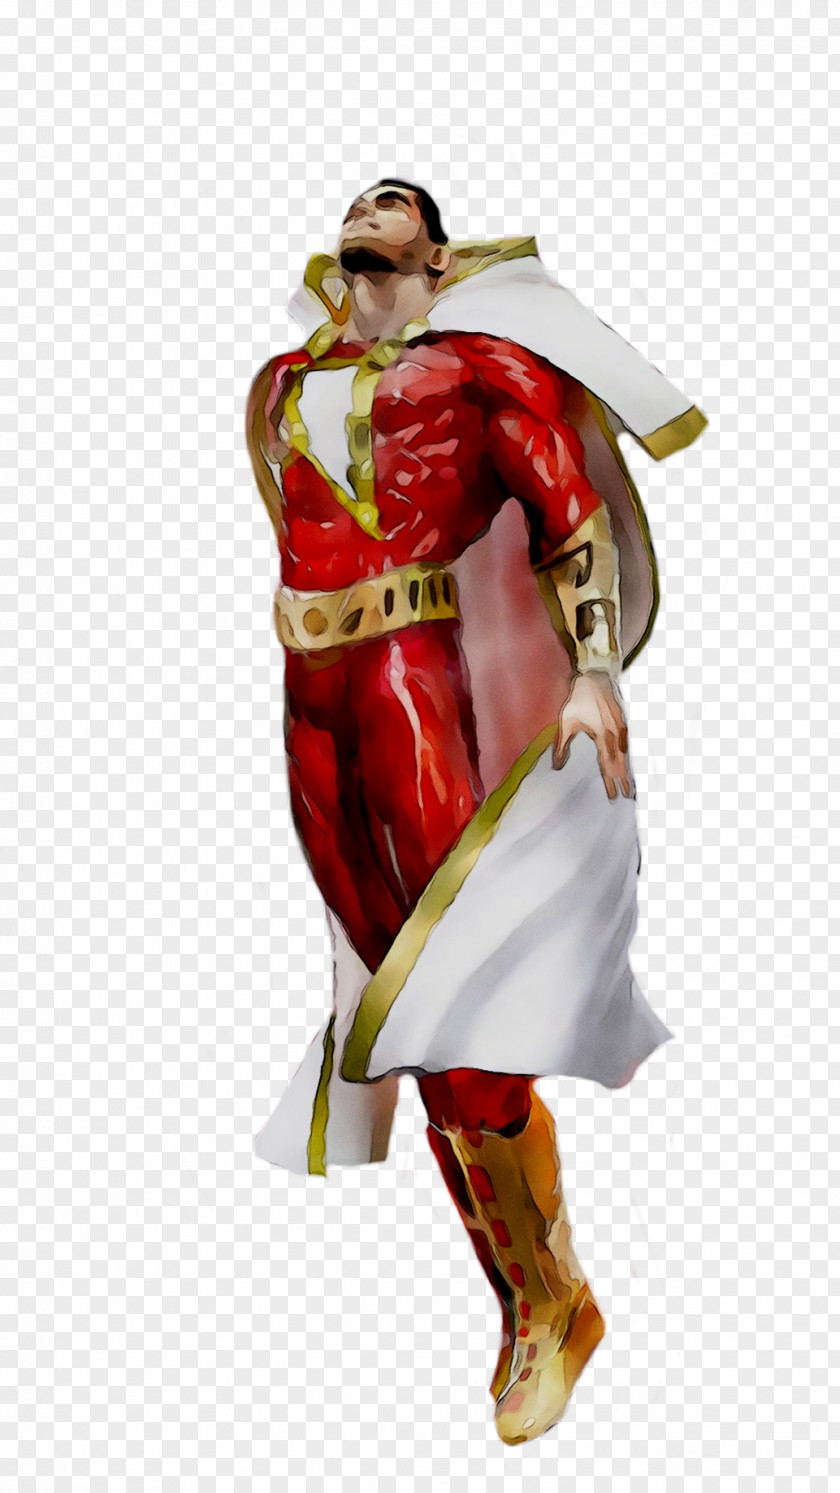 Superhero Muscle Figurine PNG